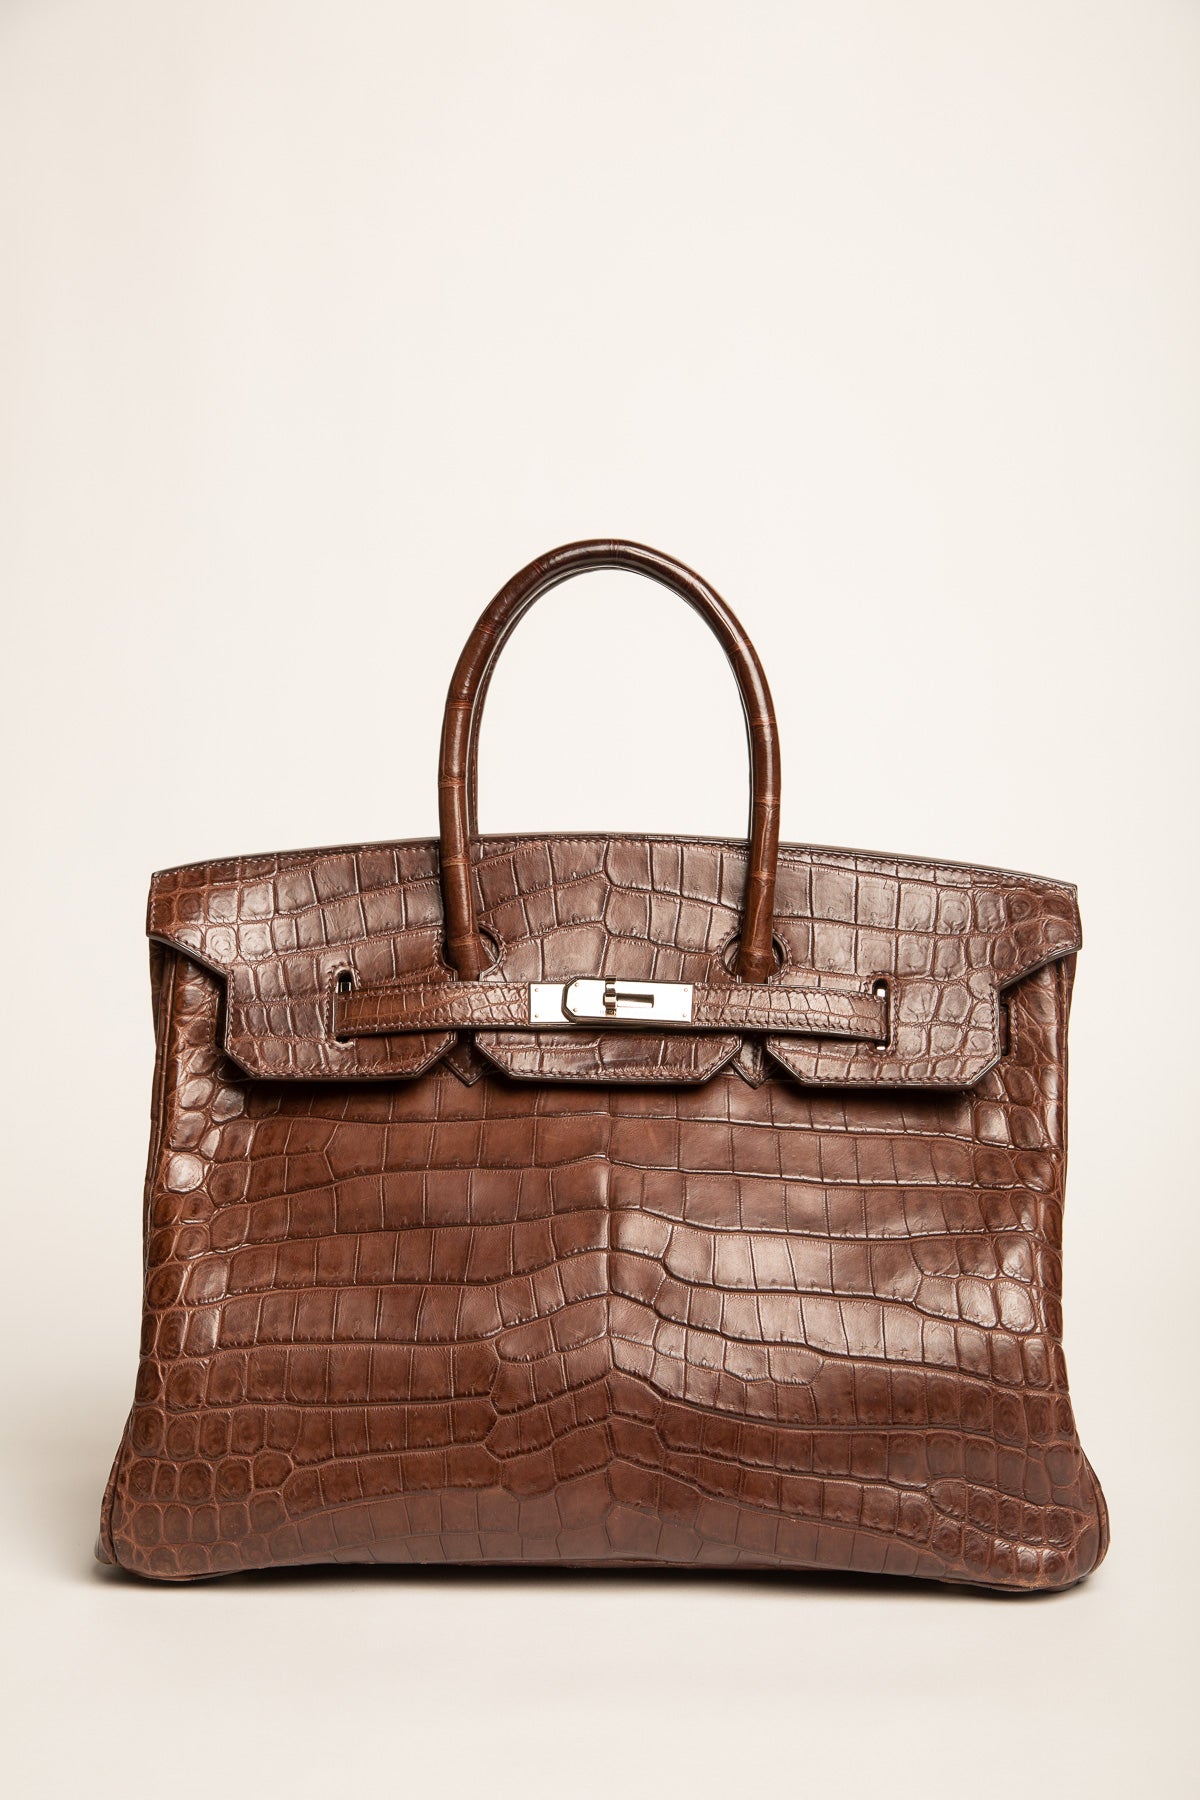 VIA LA MODA Cognac Genuine Nile Crocodile Leather Birkin 35 Style